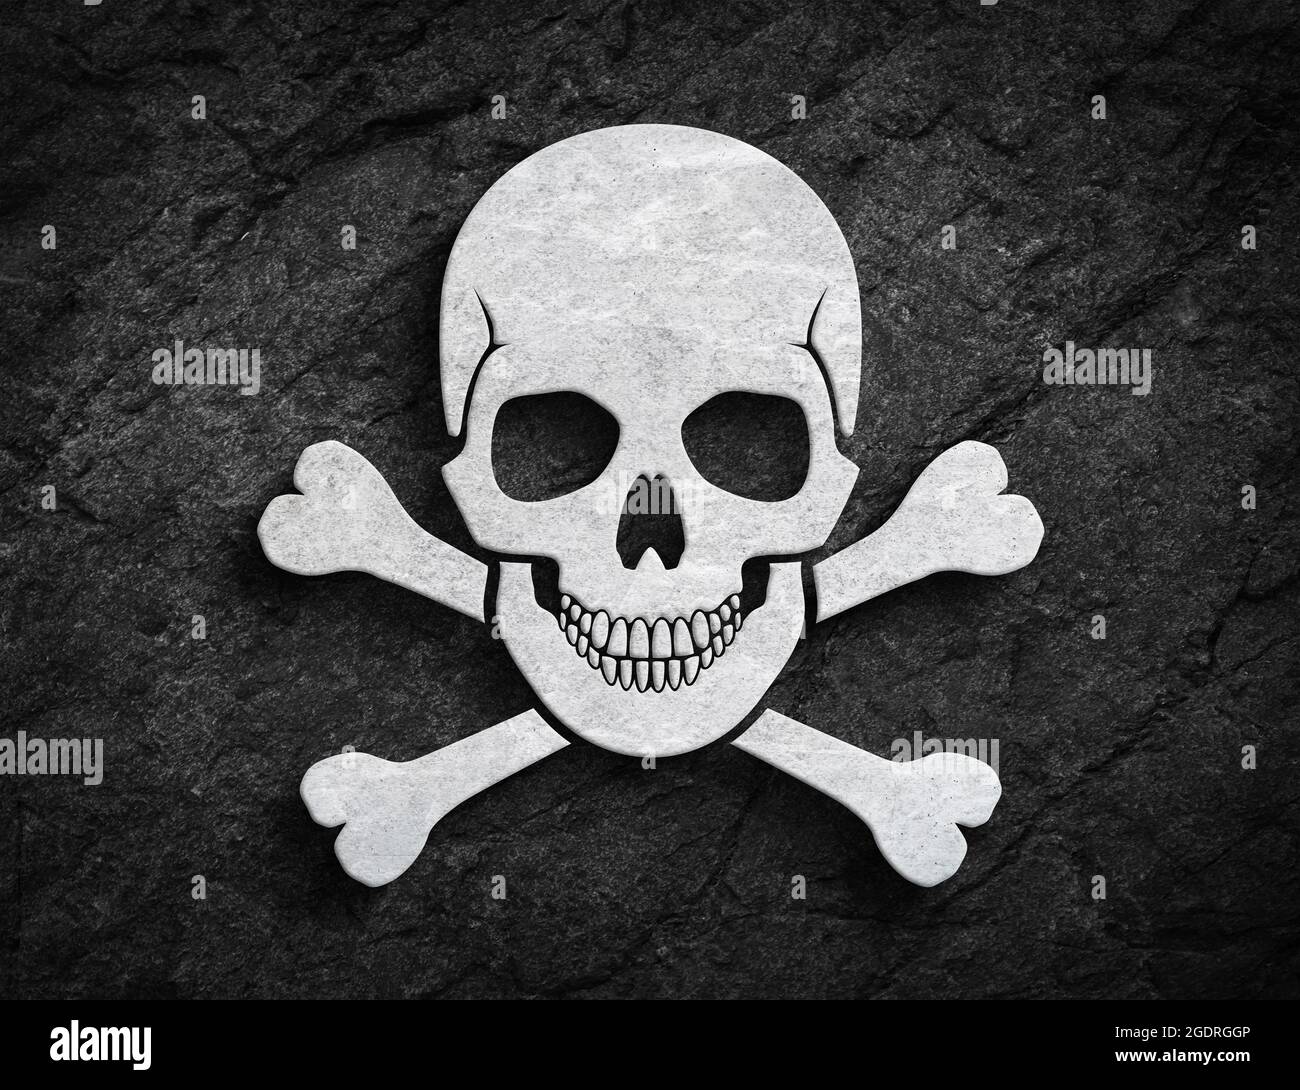 Human pirate skull symbol with crossbones symbol made of stone on dark stone wall background Stock Photo